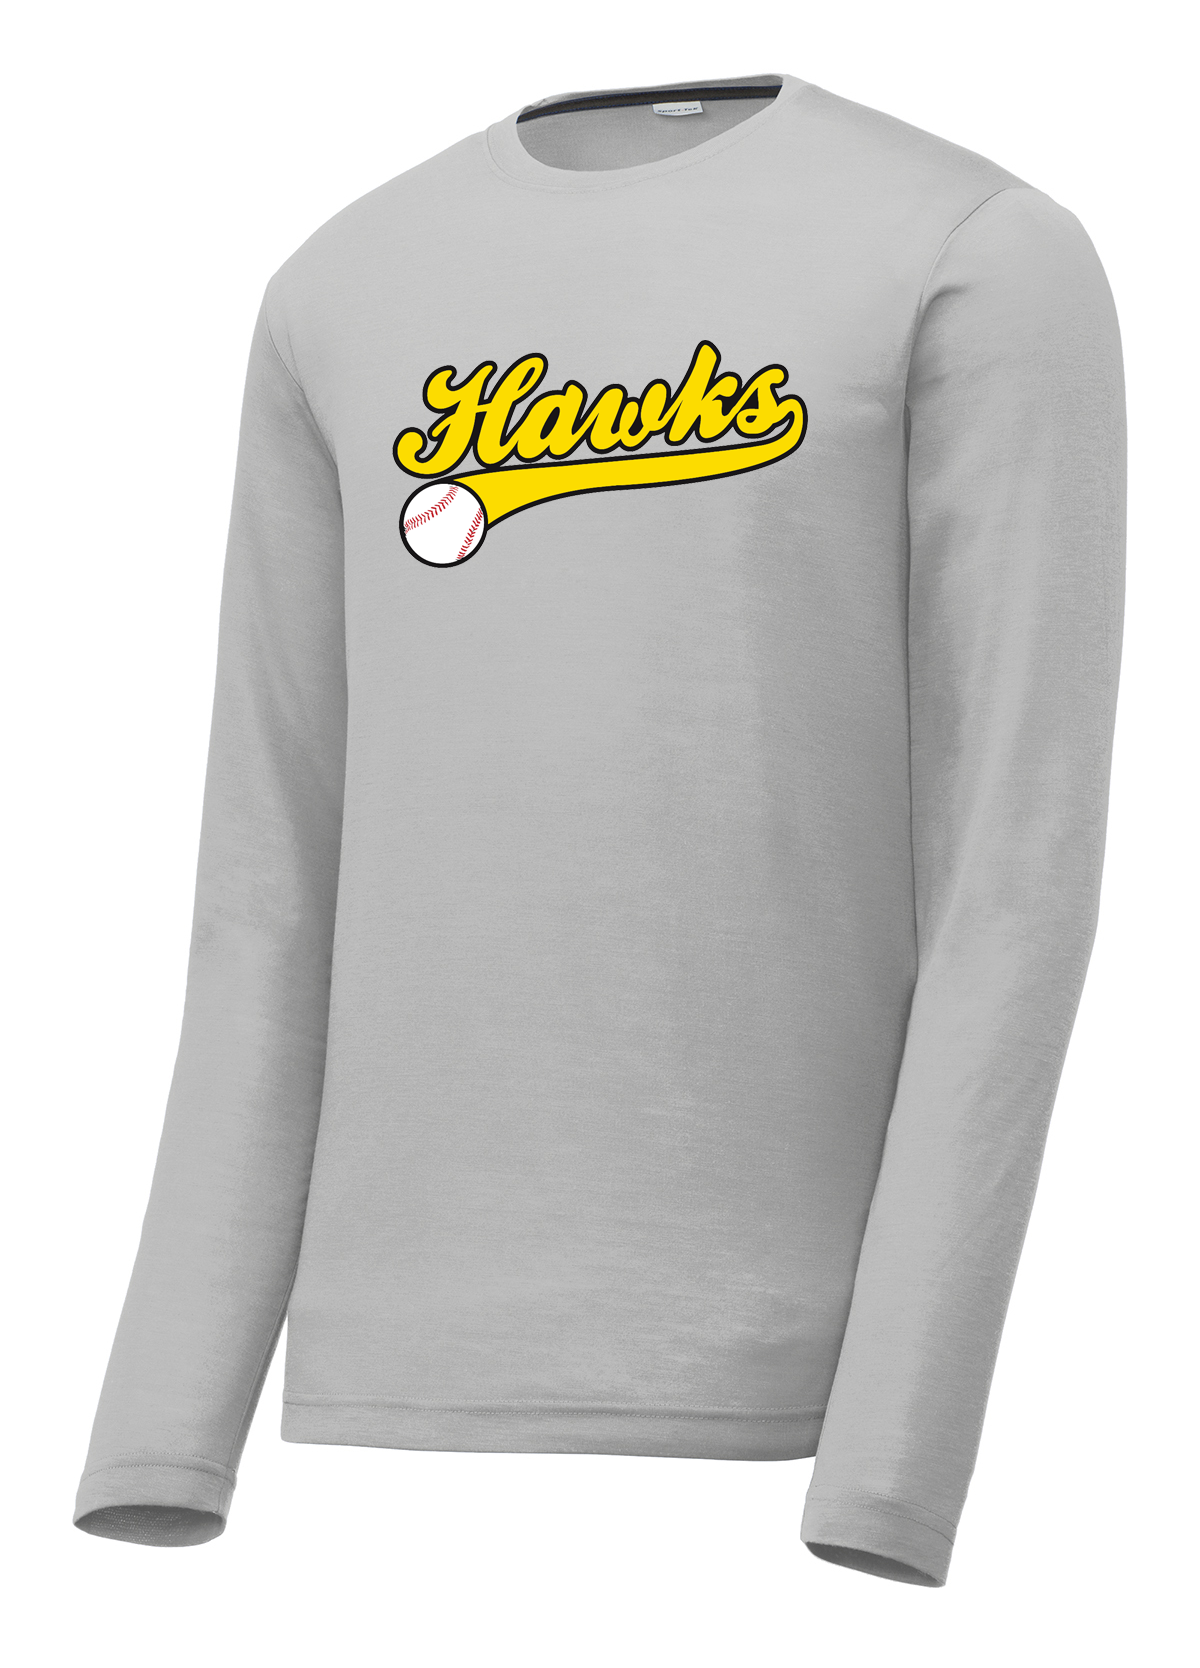 Hawks Baseball Long Sleeve CottonTouch Performance Shirt